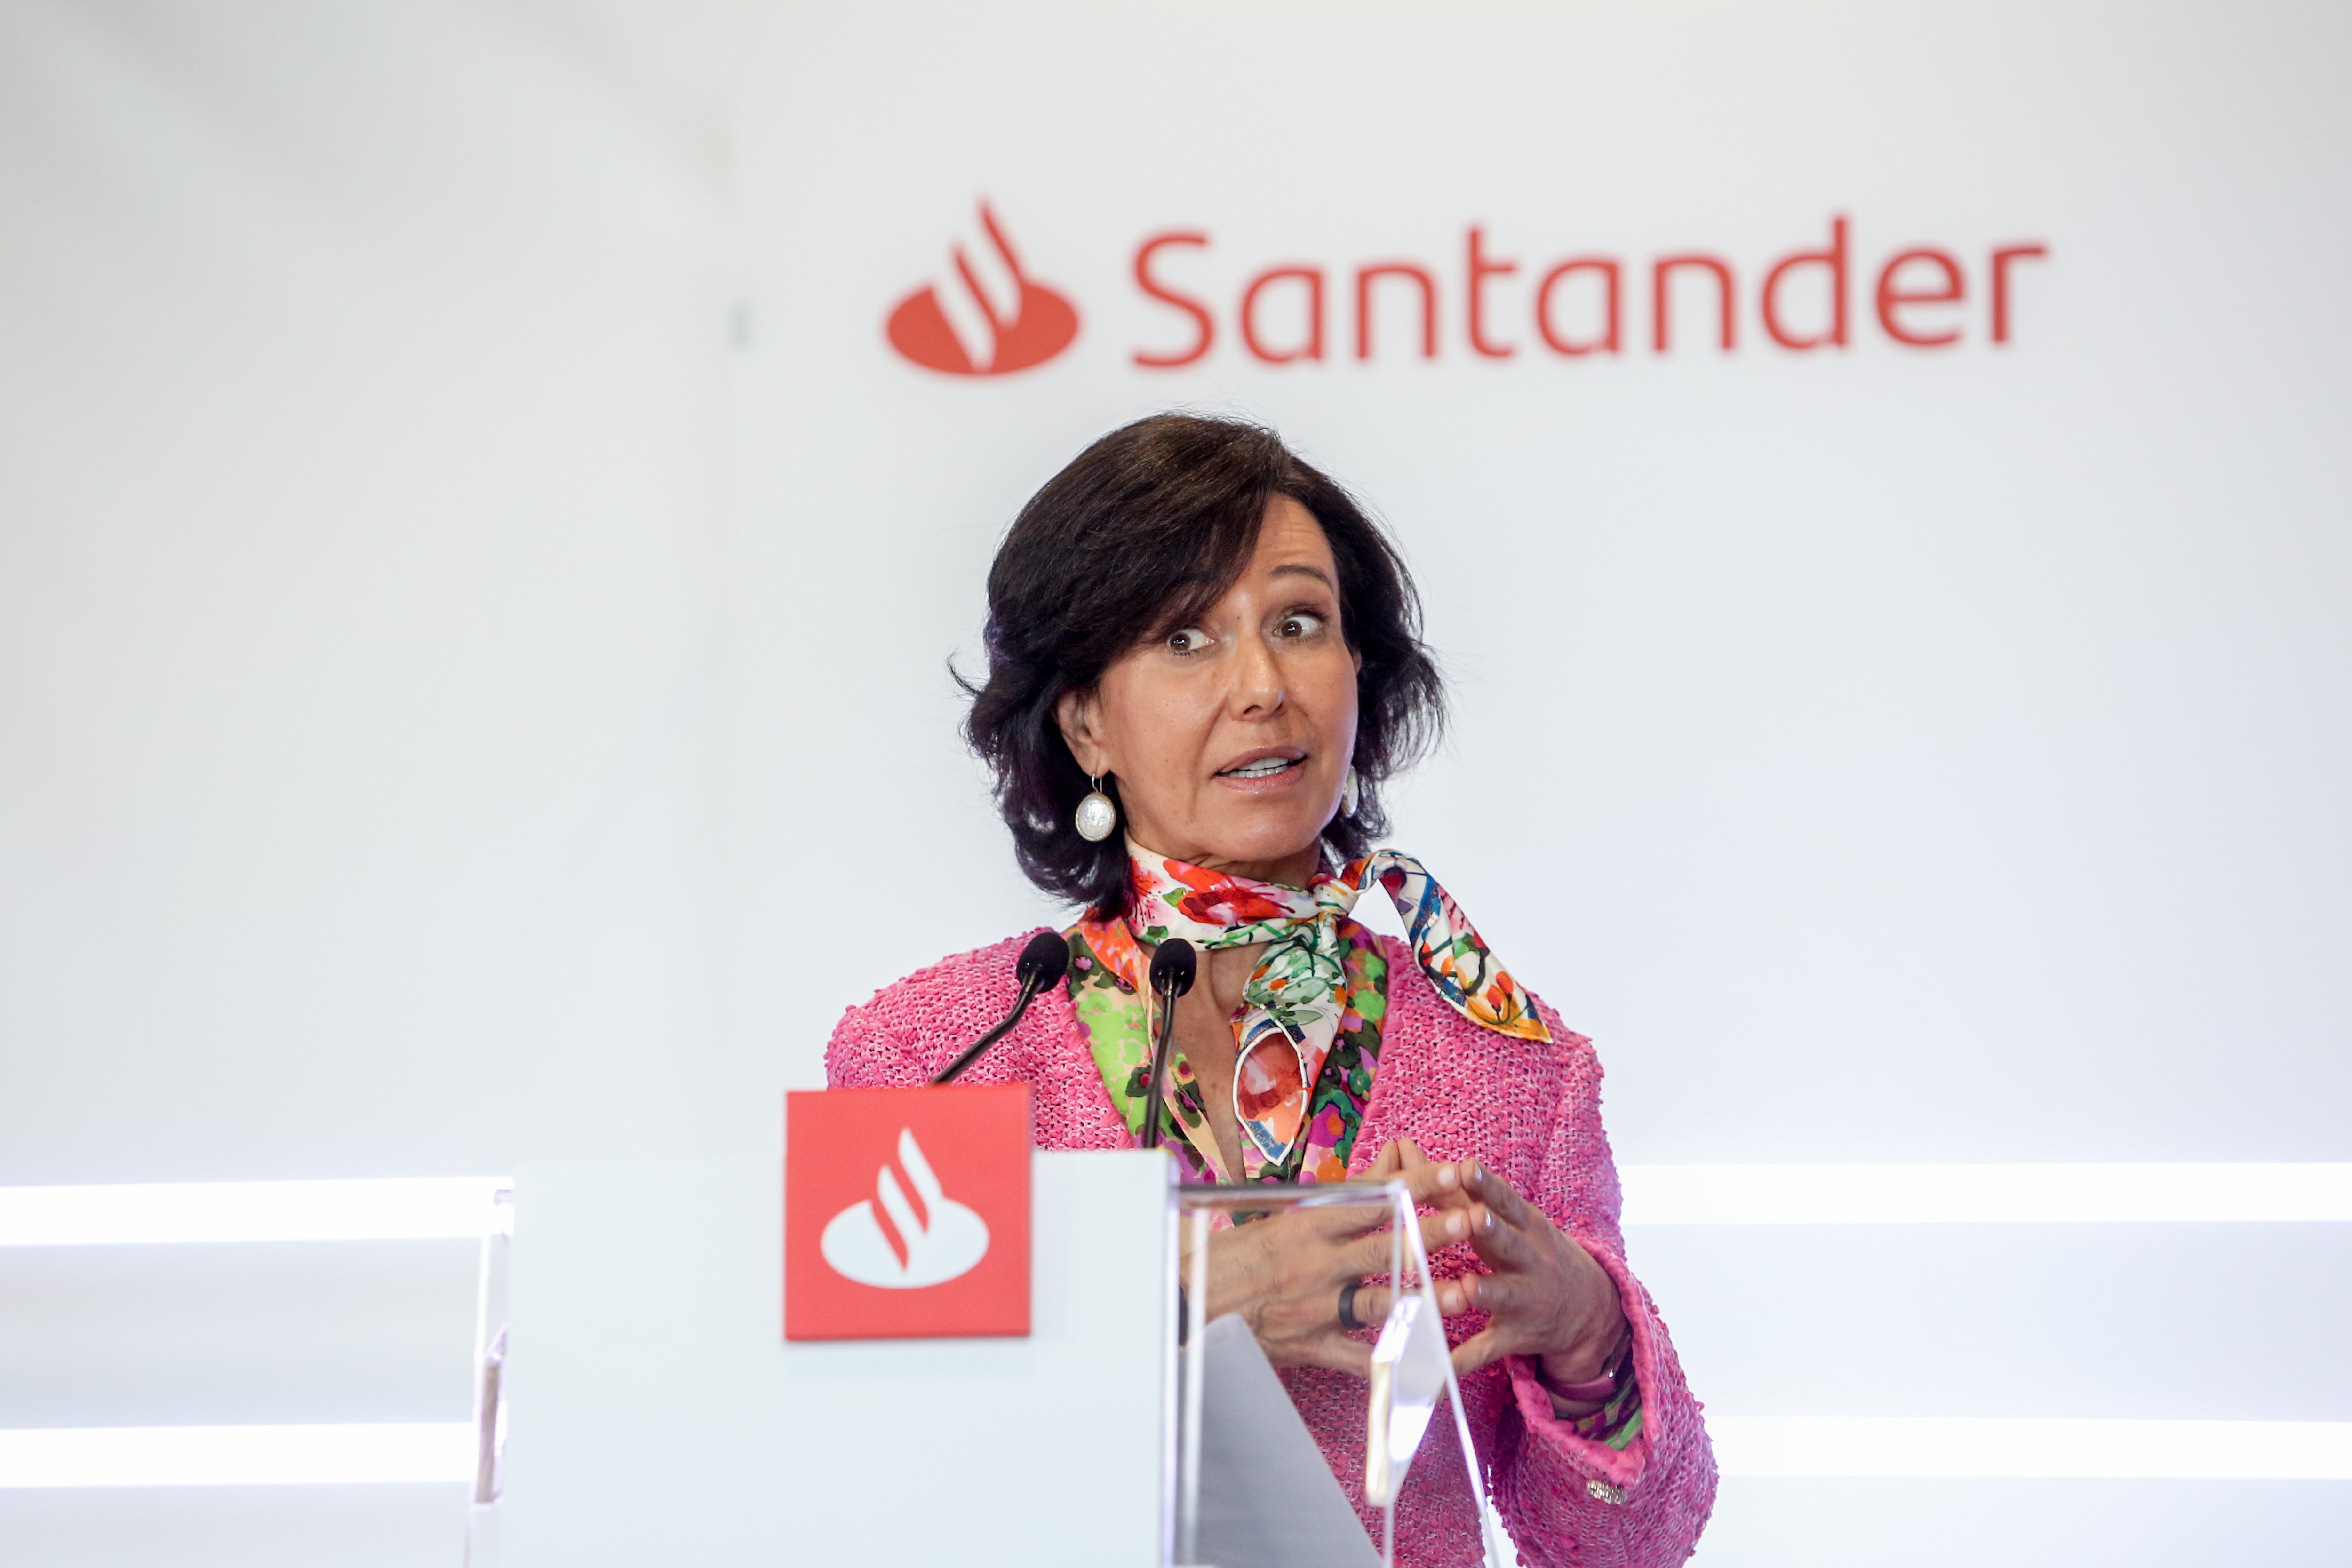 La presidenta del Banco Santander, Ana Botín